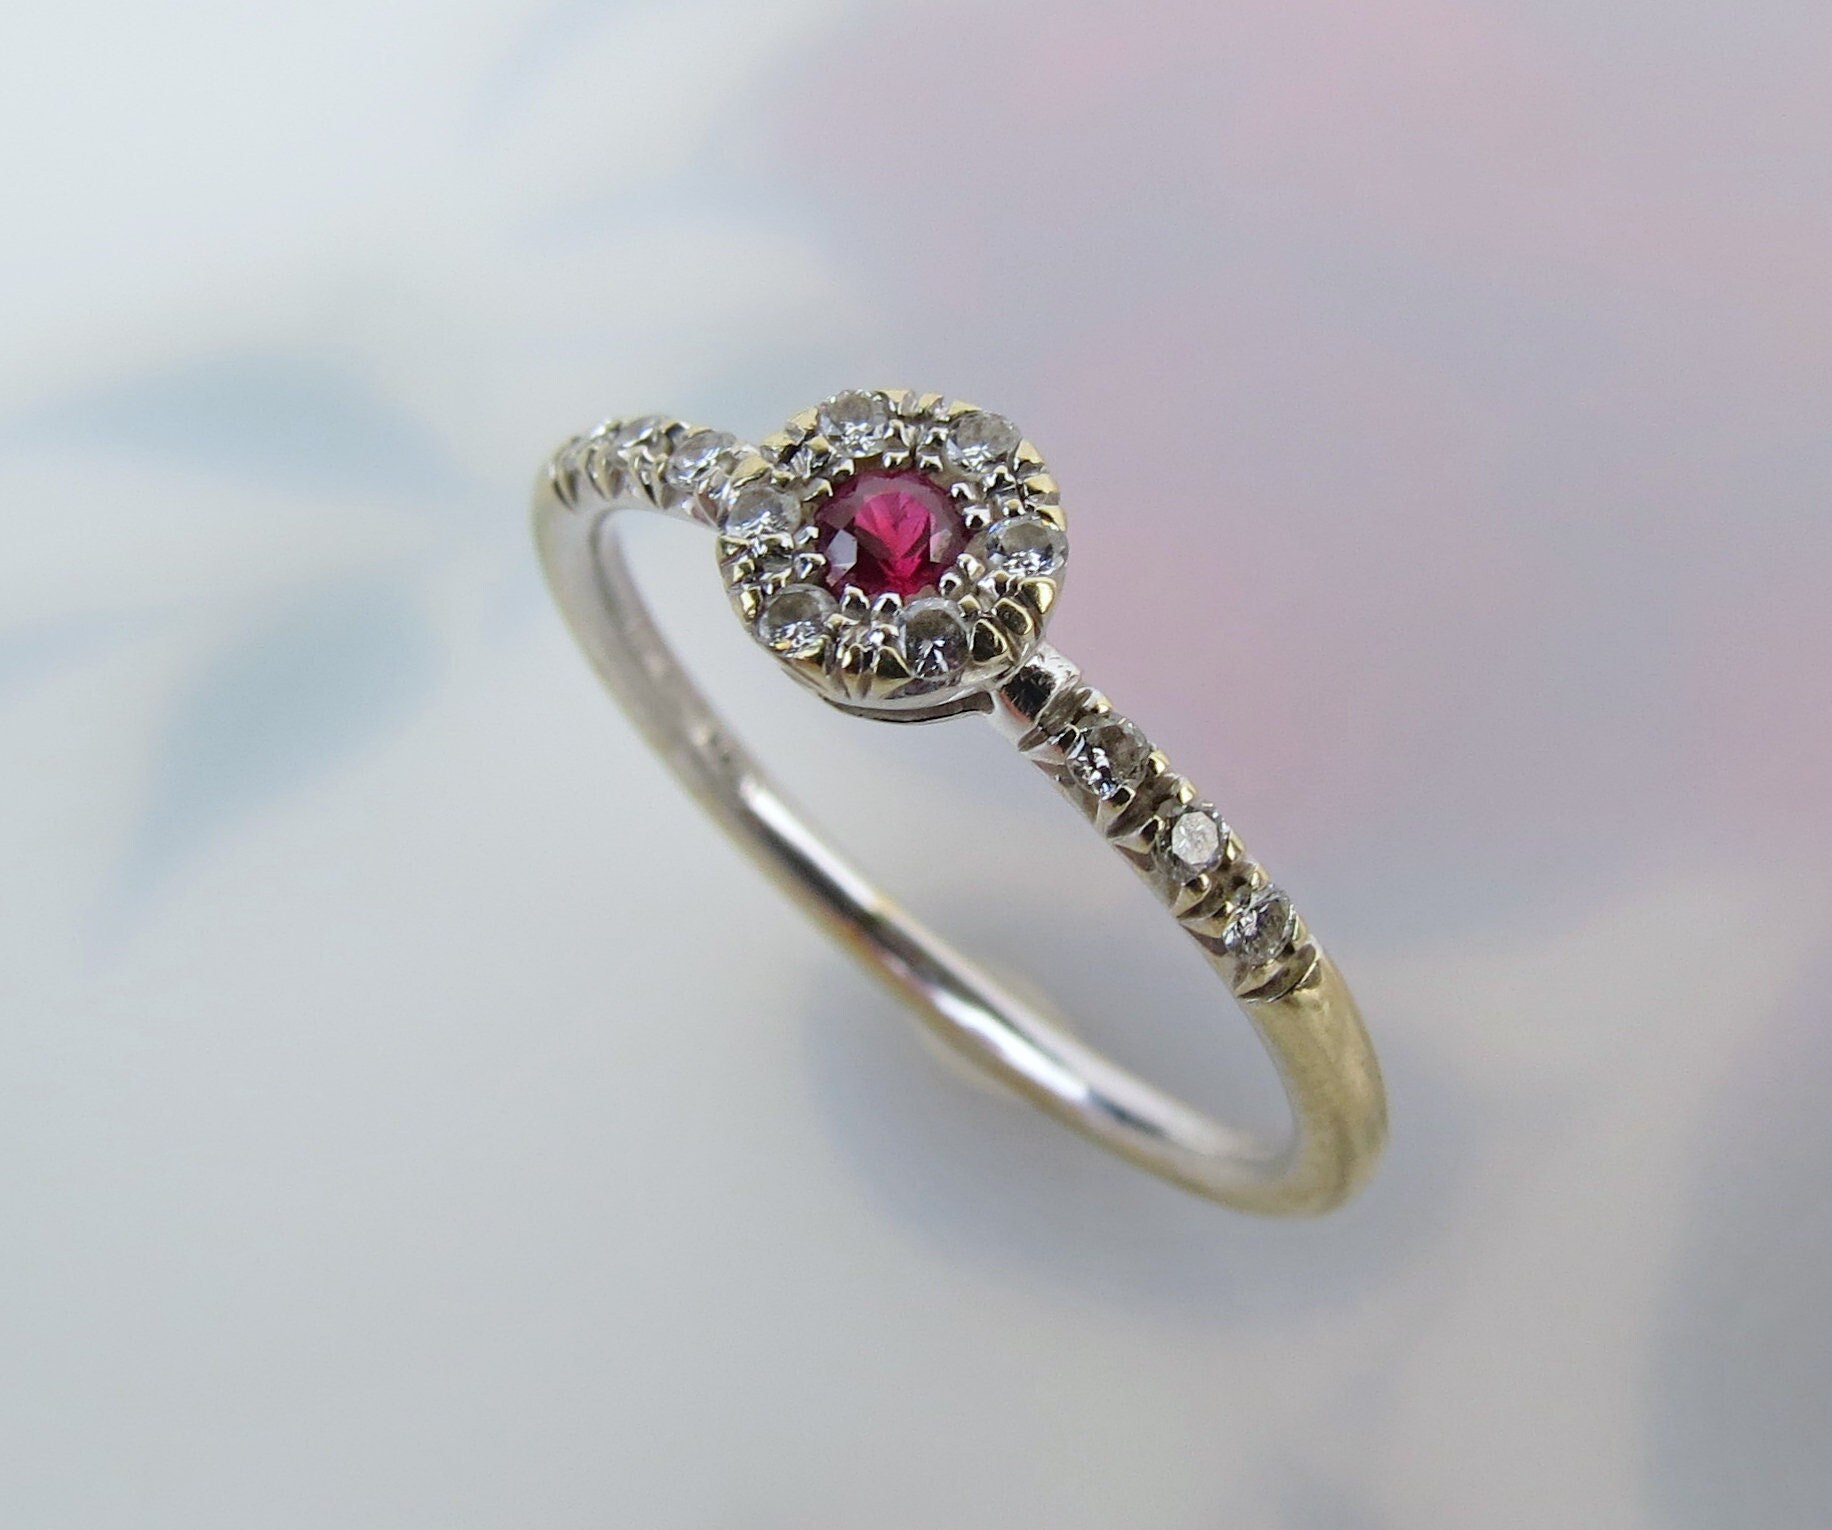 Colour Blossom Mini Star Ring, Pink Gold, Malachite And Diamond